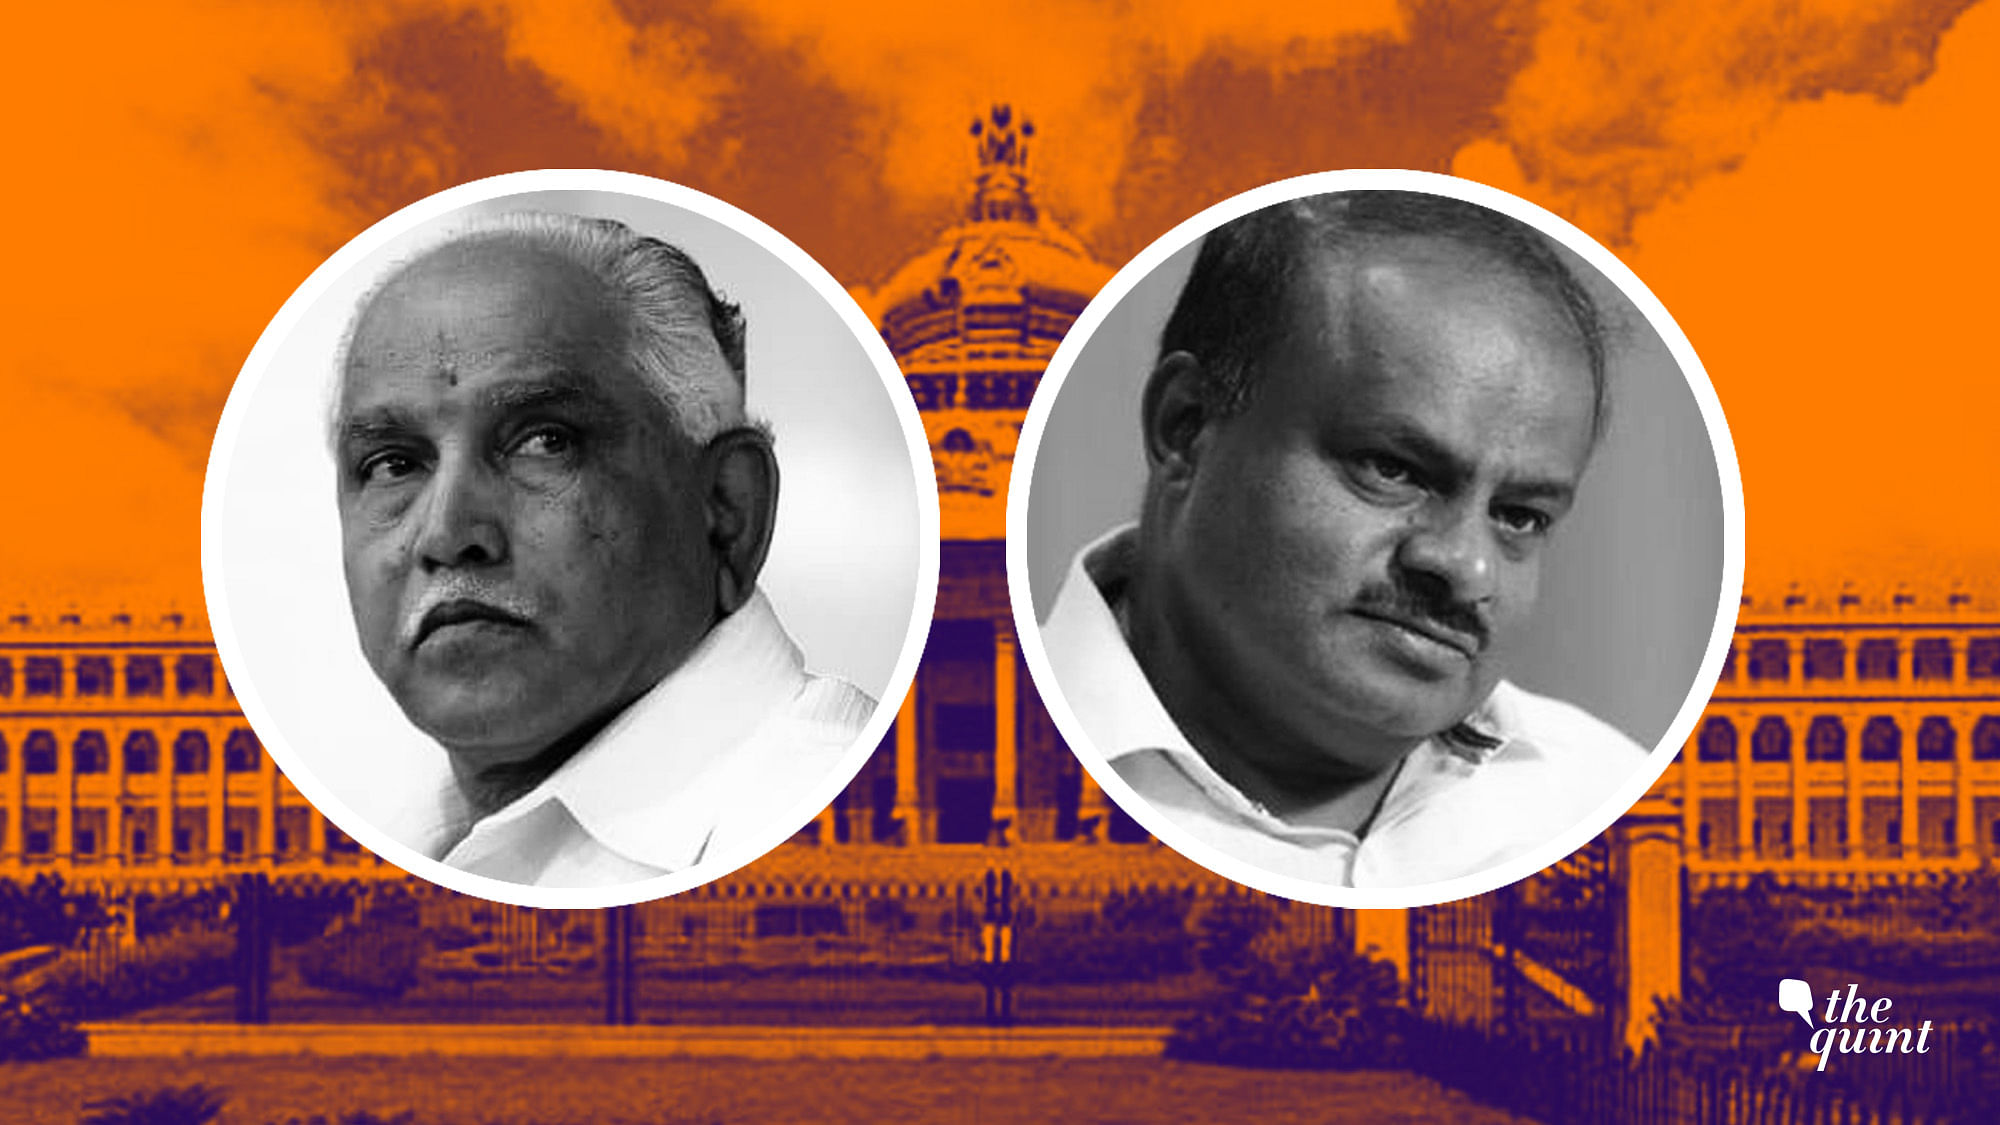 After Yeddyurappa’s resignation on Saturday, HD Kumaraswamy is likely to take oath as Karnataka CM on Wednesday.